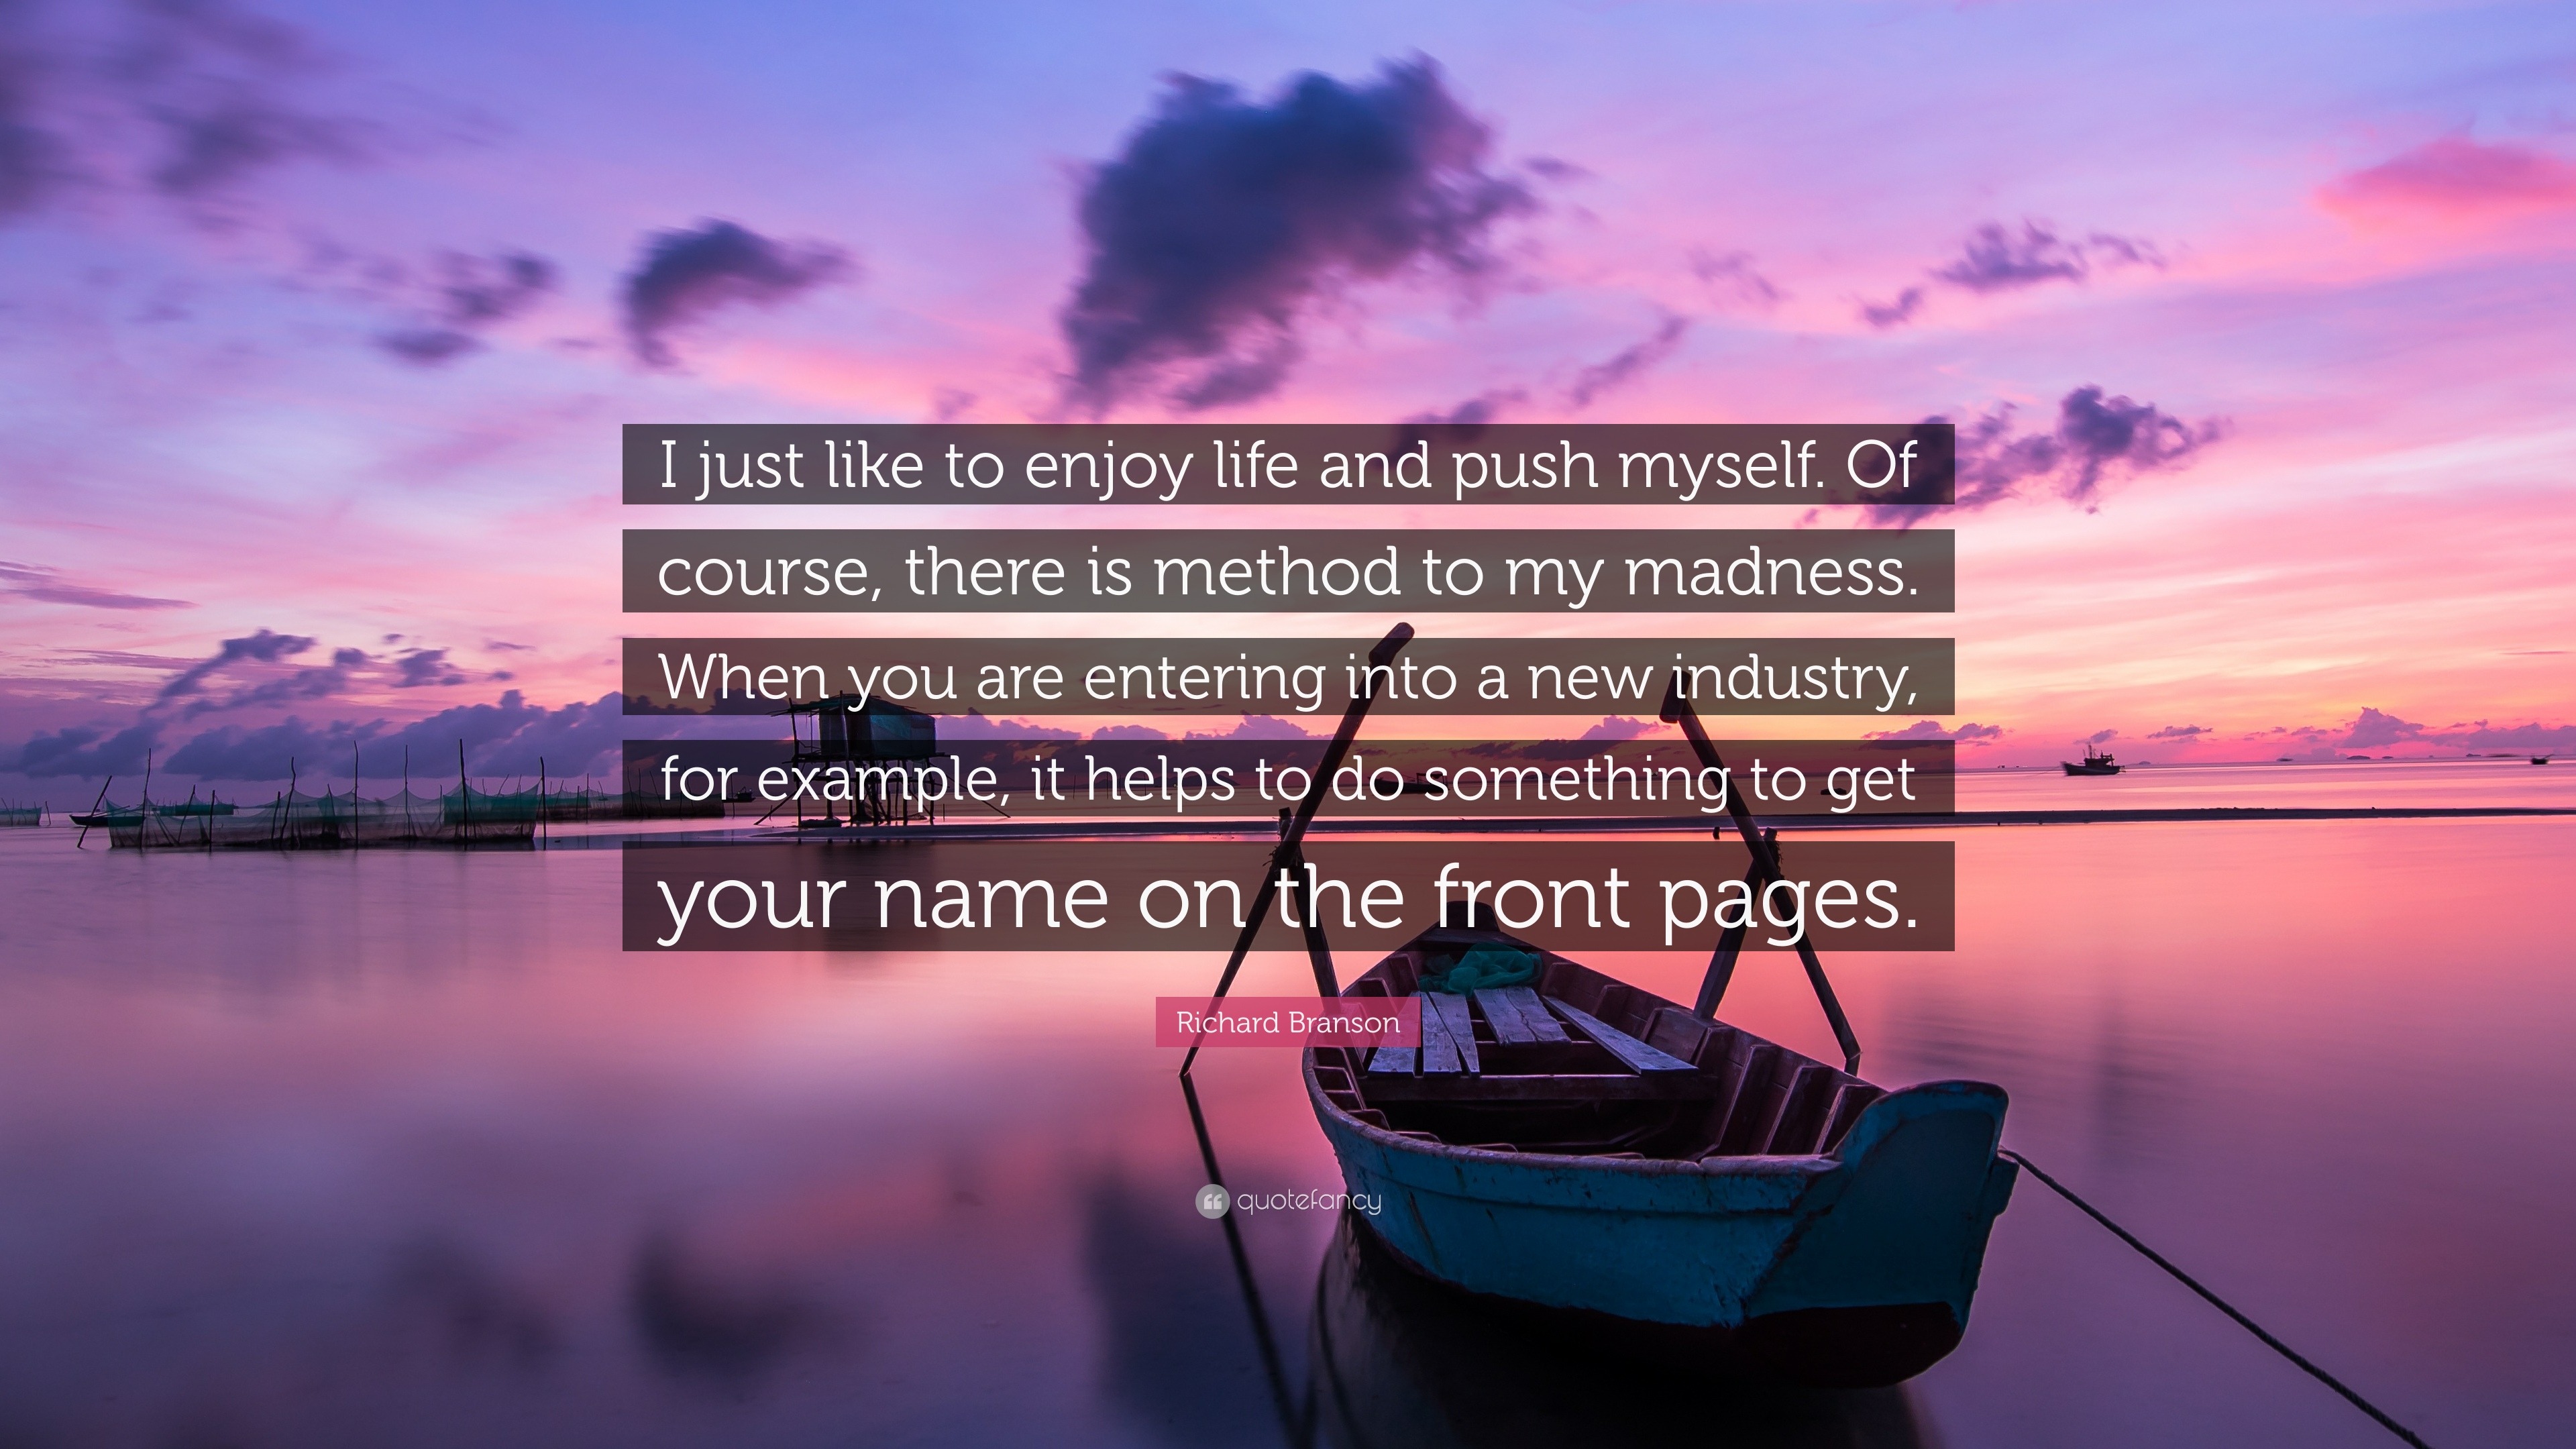 Richard Branson Quote “I just like to enjoy life and push myself